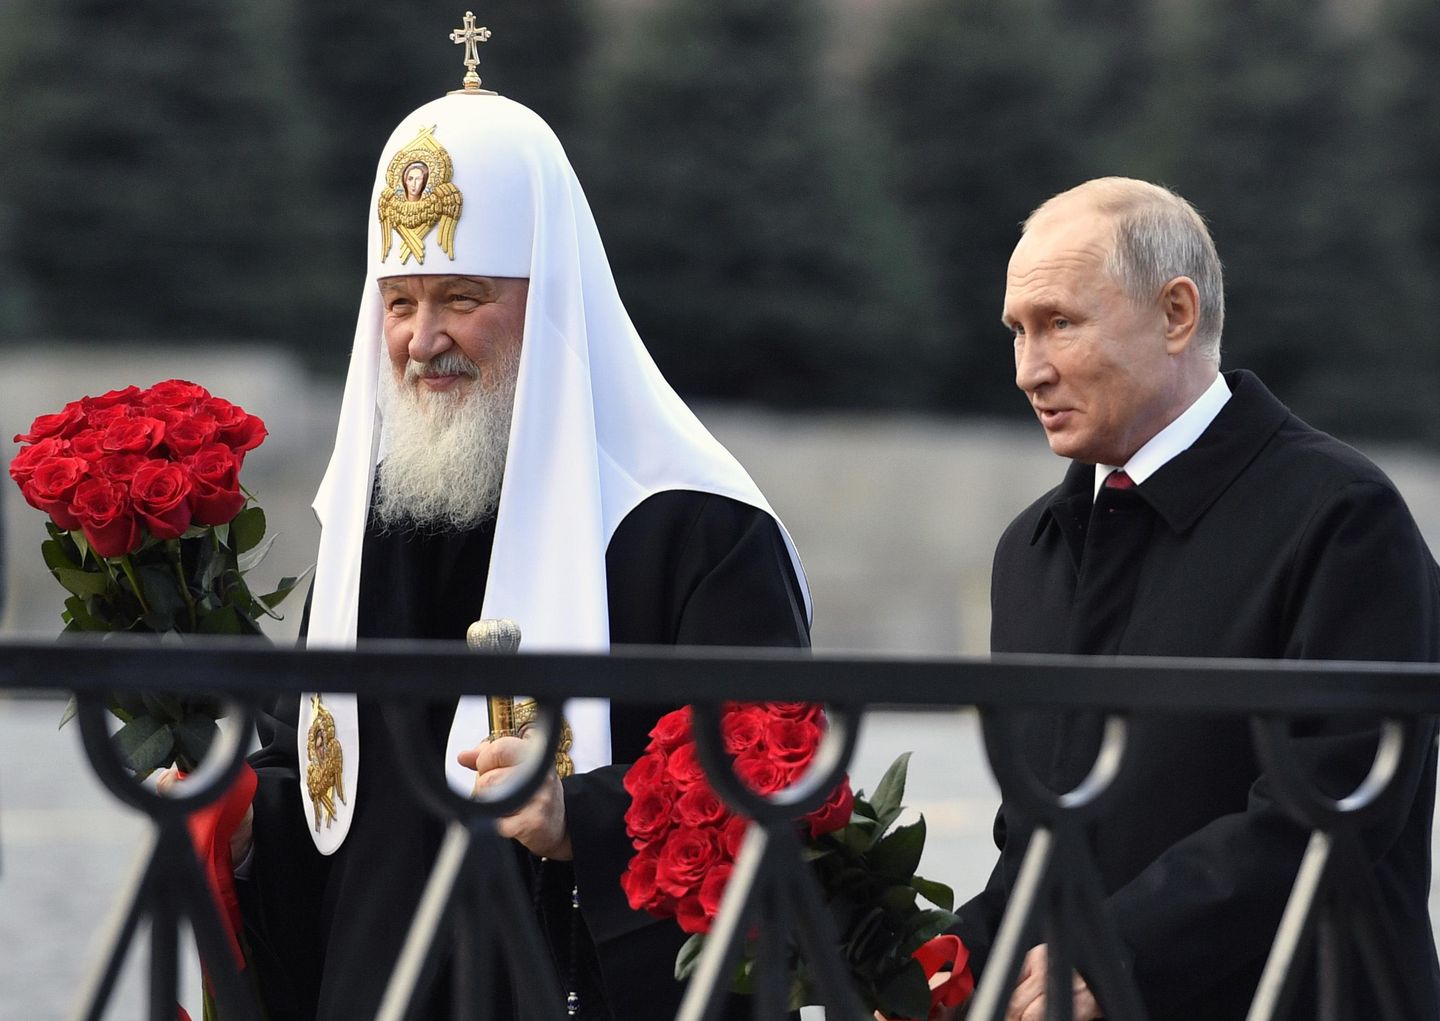 Moscow-aligned Ukrainian Orthodox clerics call for tribunal for Patriarch Kirill, key Putin ally